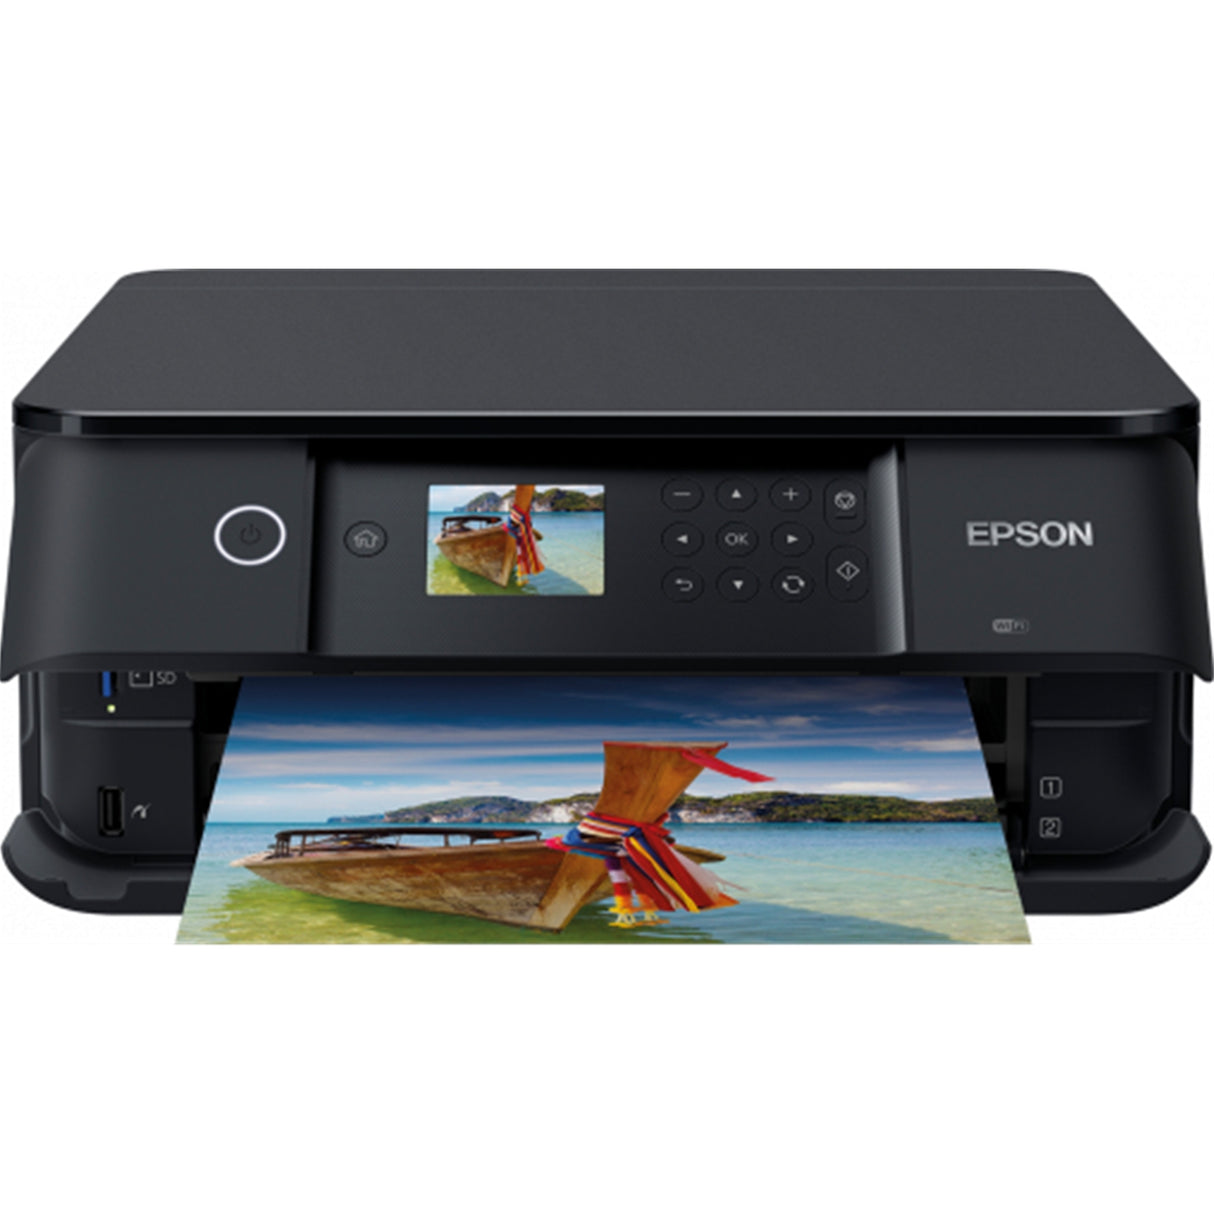 Epson Expression Premium XP-6100 C11CG97401 Inket Printer, Colour, Wireless, All-in-One, Duplex, 6.1cm LCD Touchscreen Display